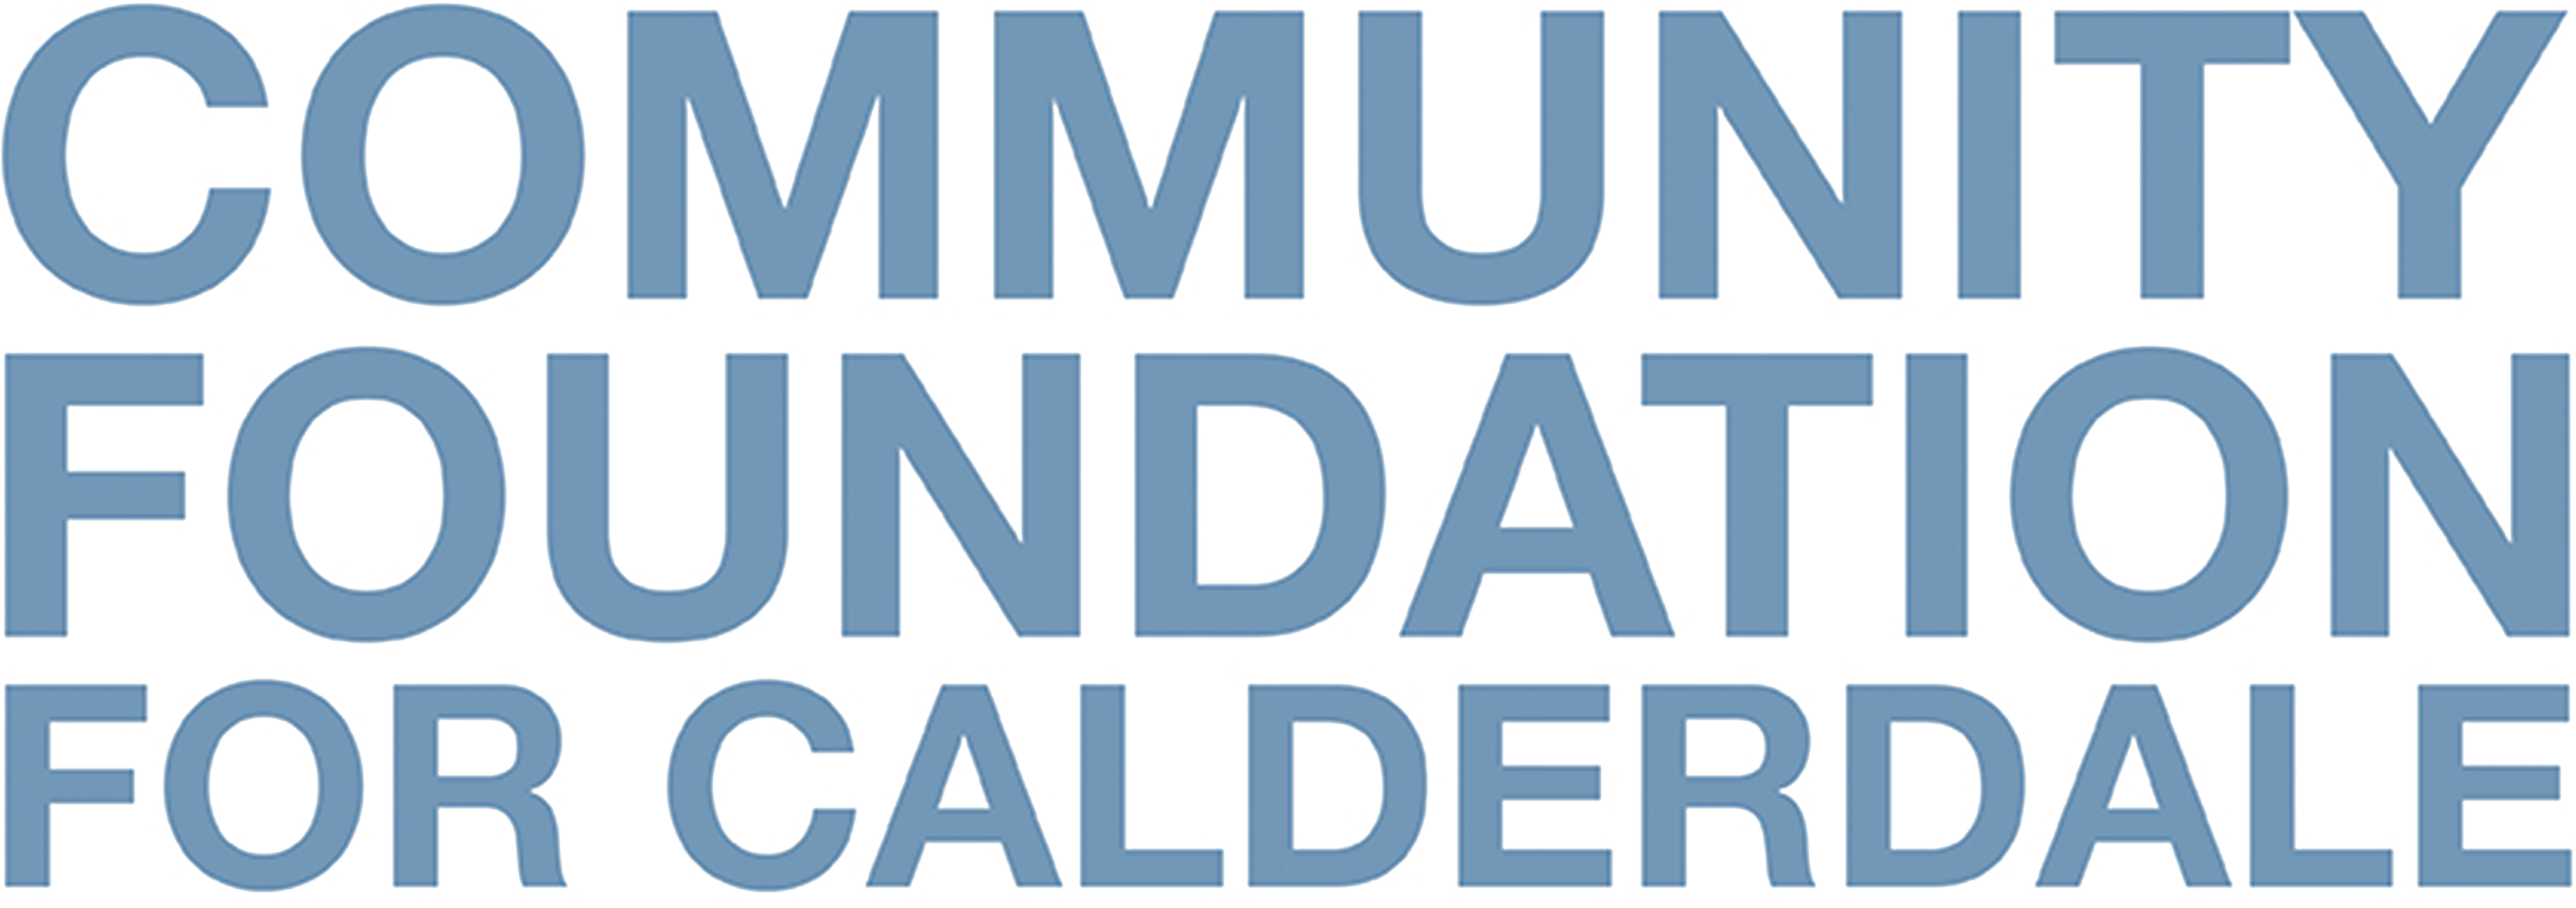 logo for Community Foundation for Calderdale